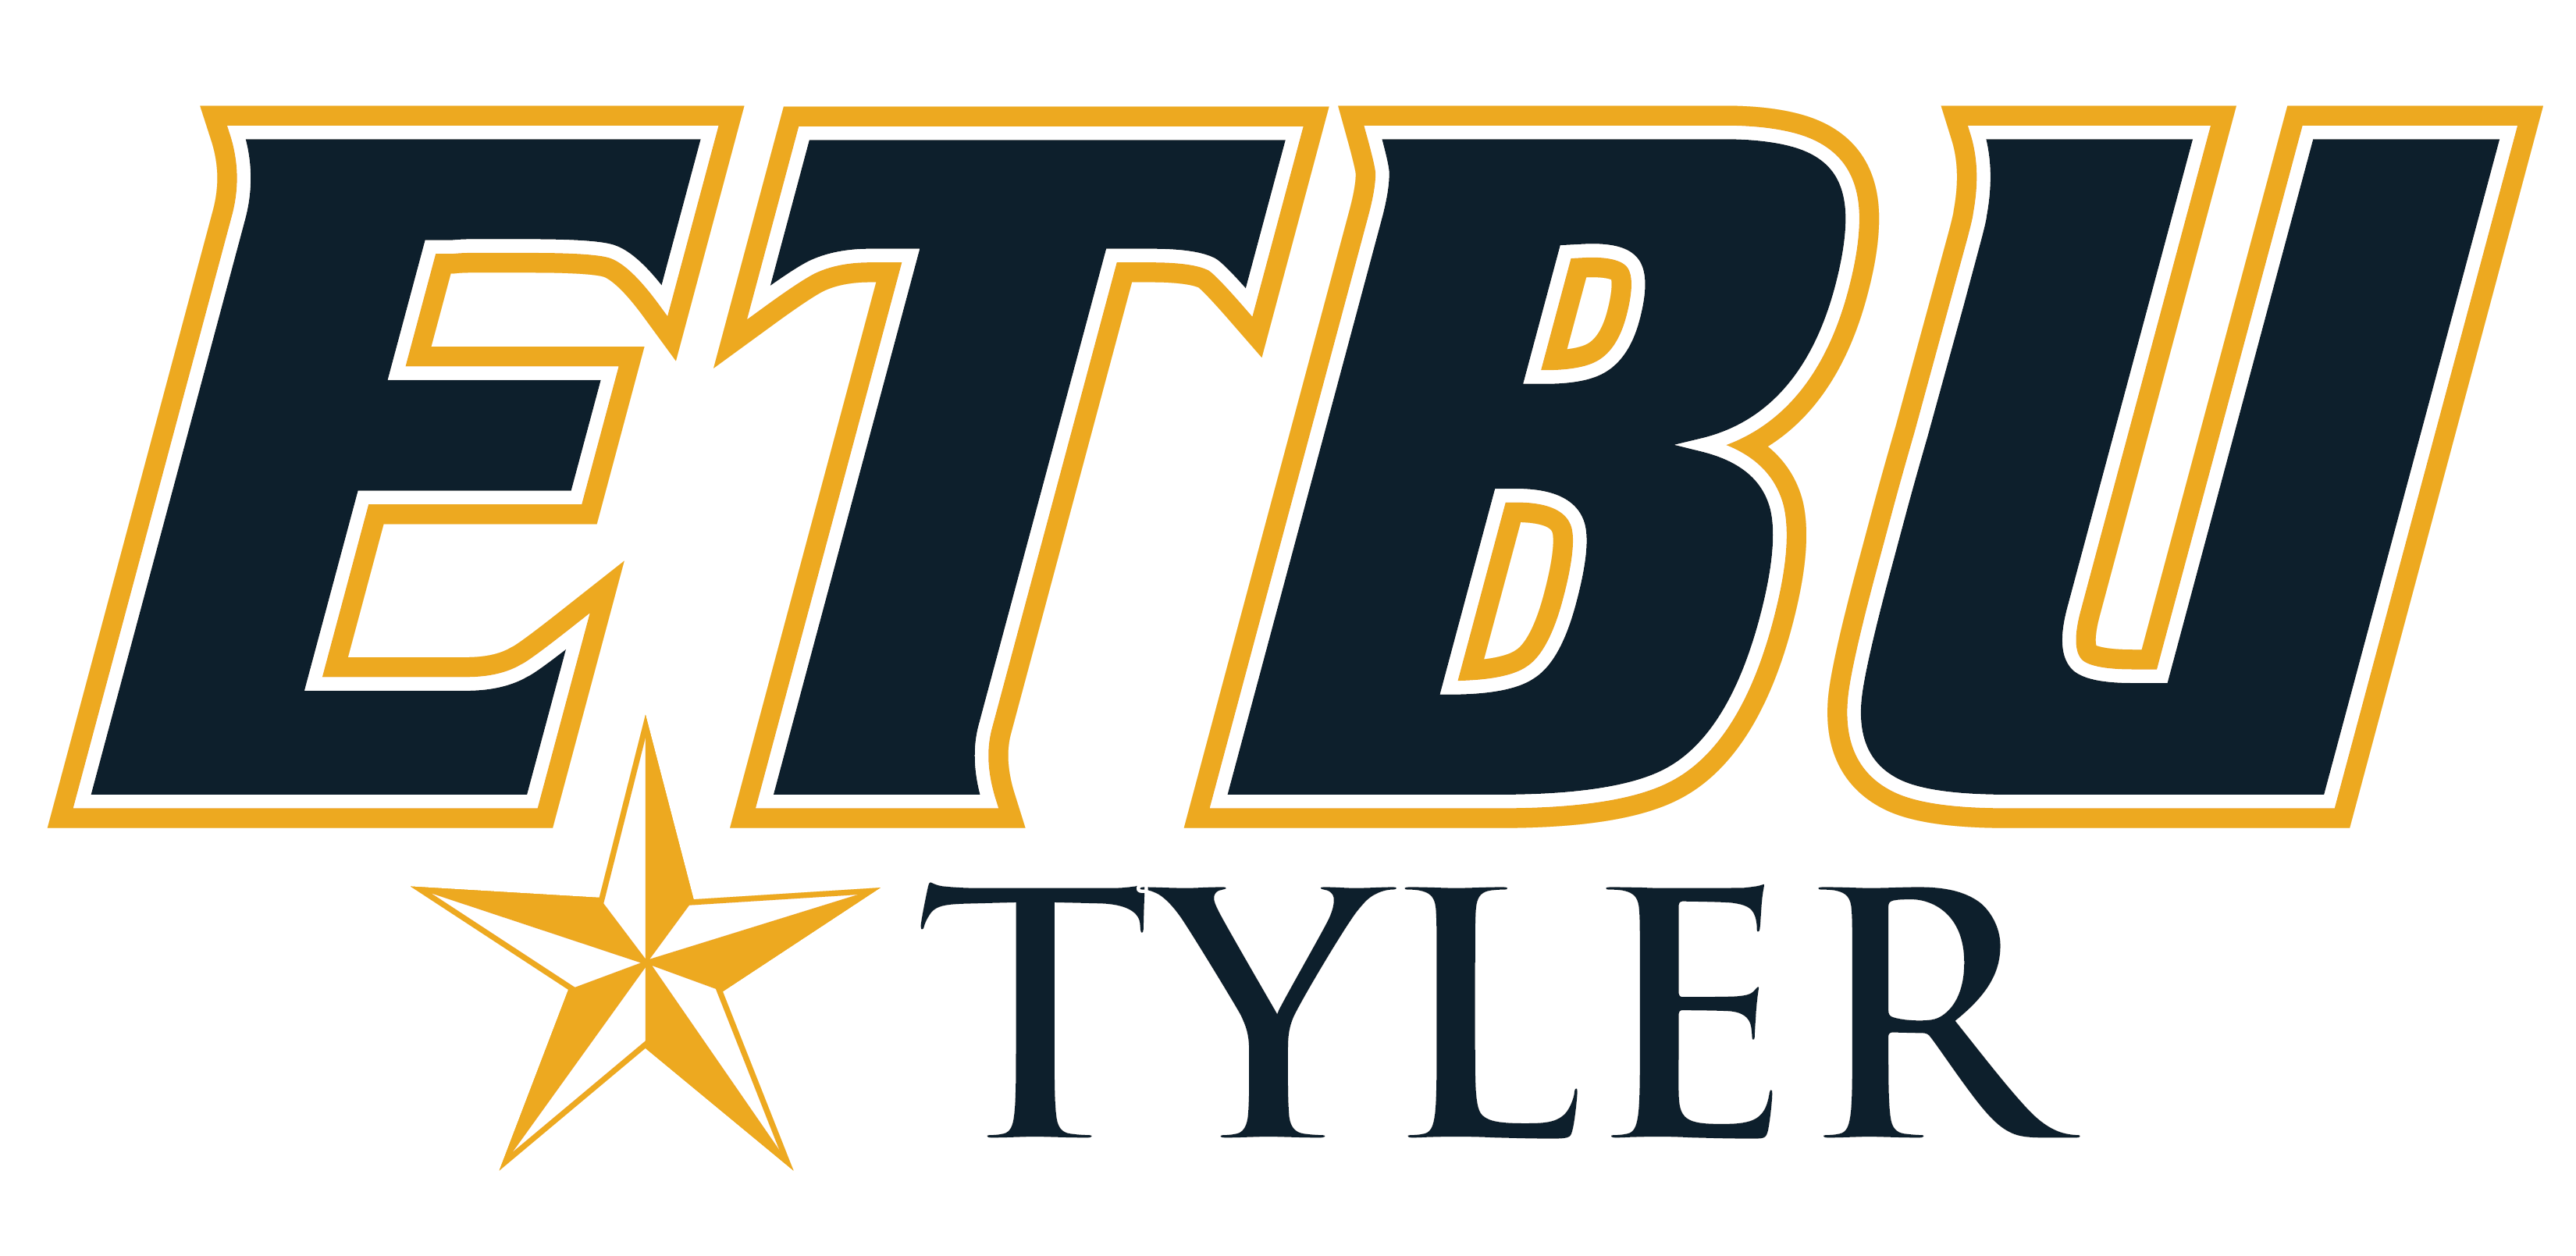 ETBU Tyler Logo